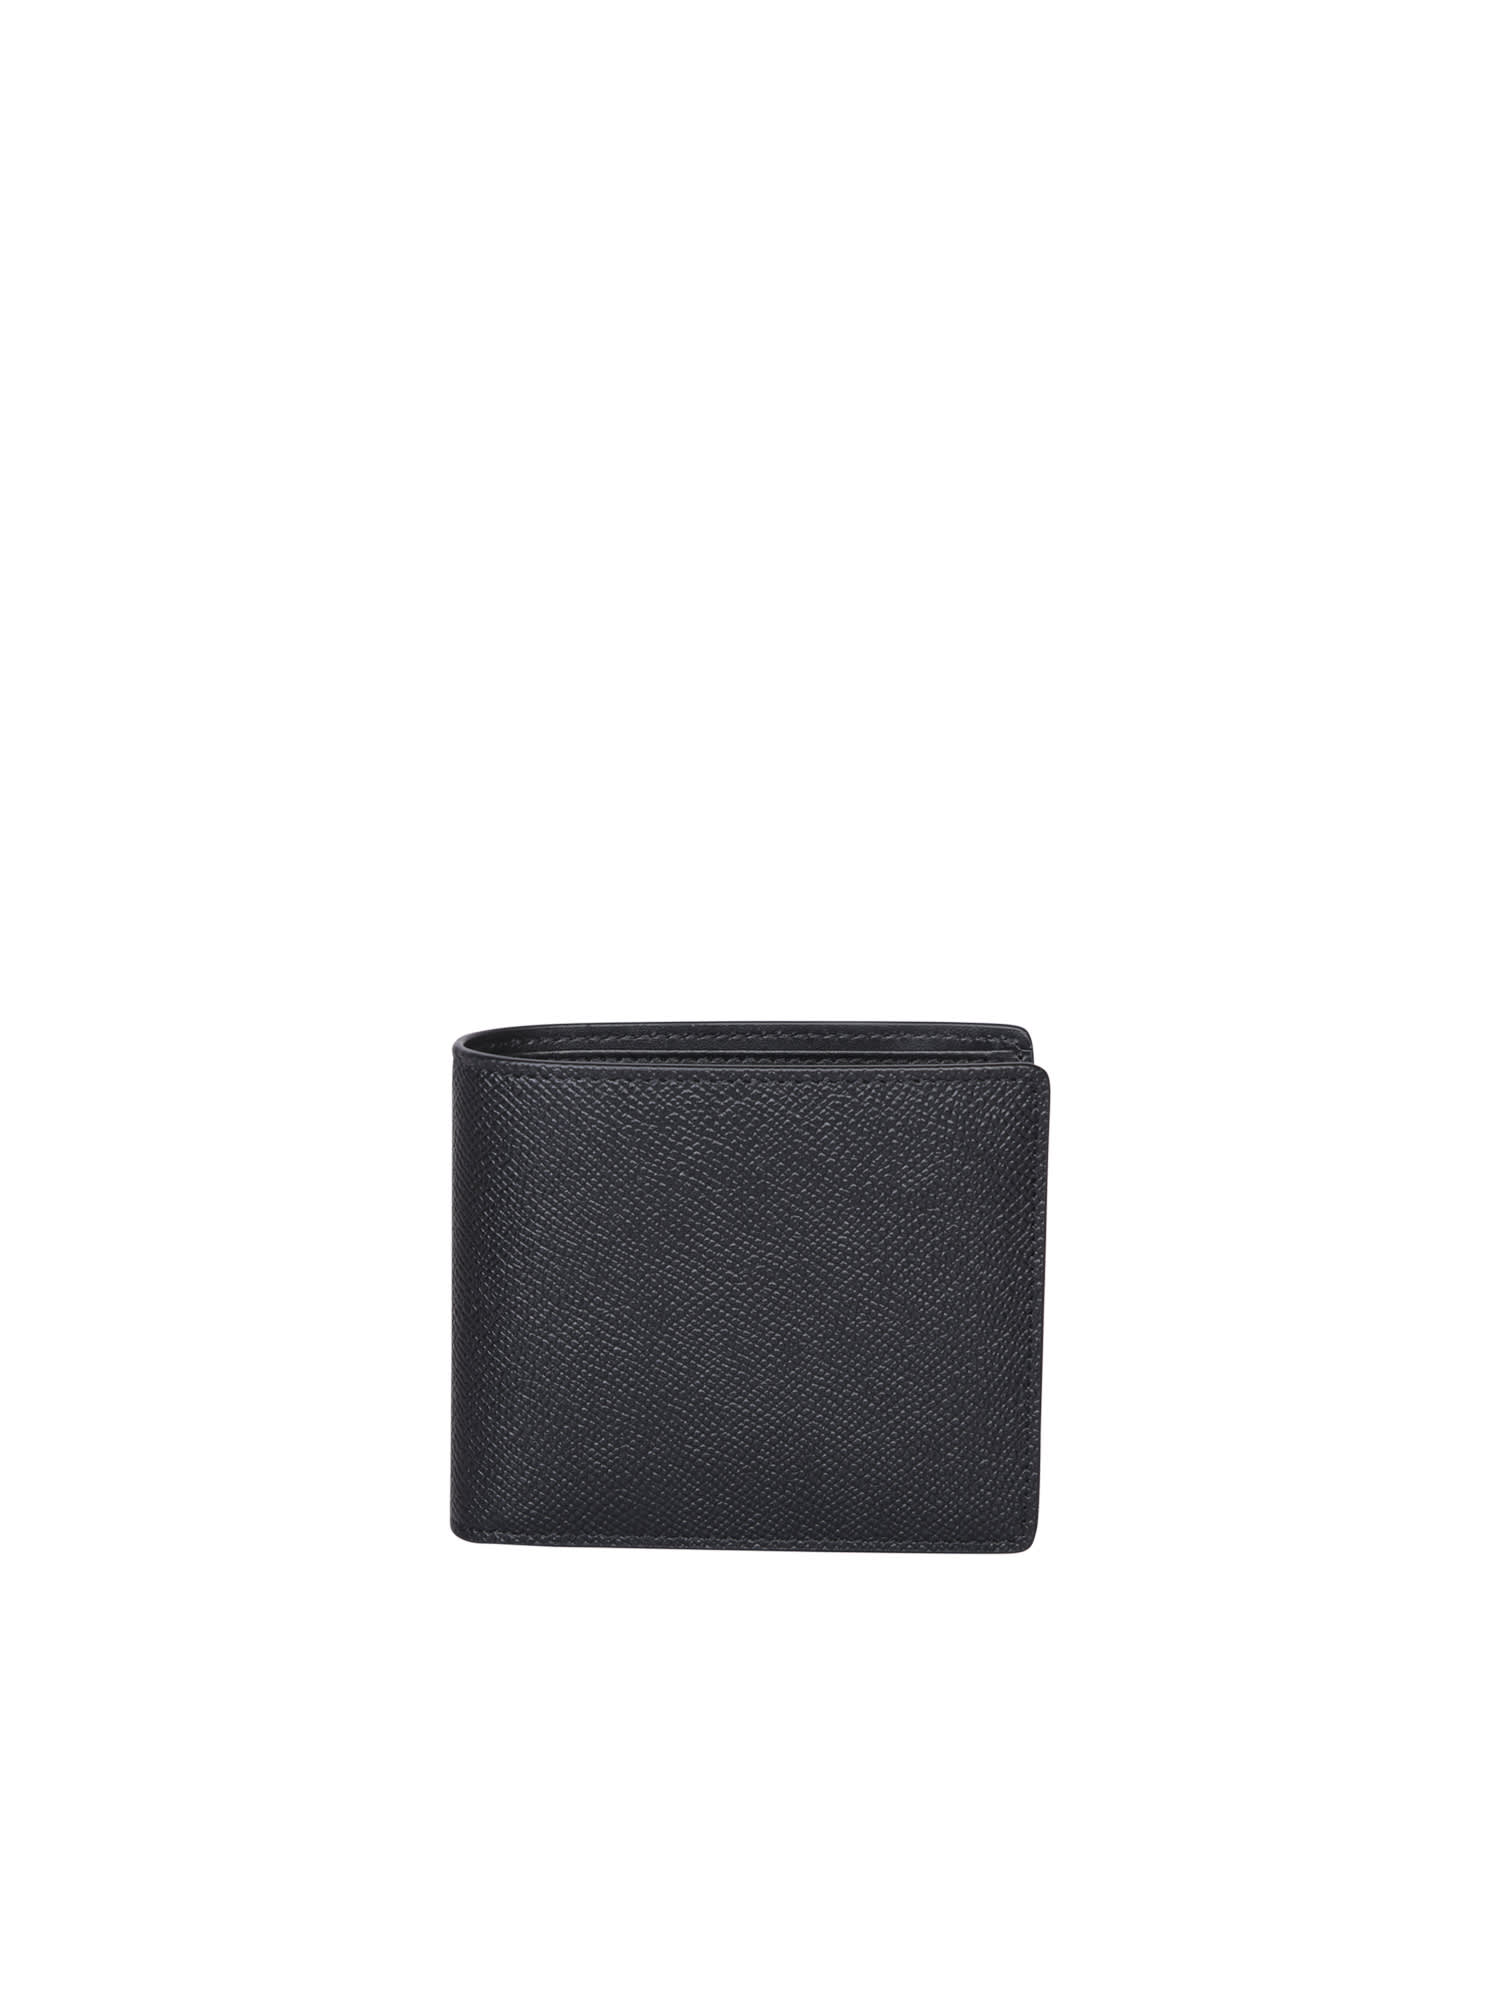 Maison Margiela Four Stitches Black Slim Wallet